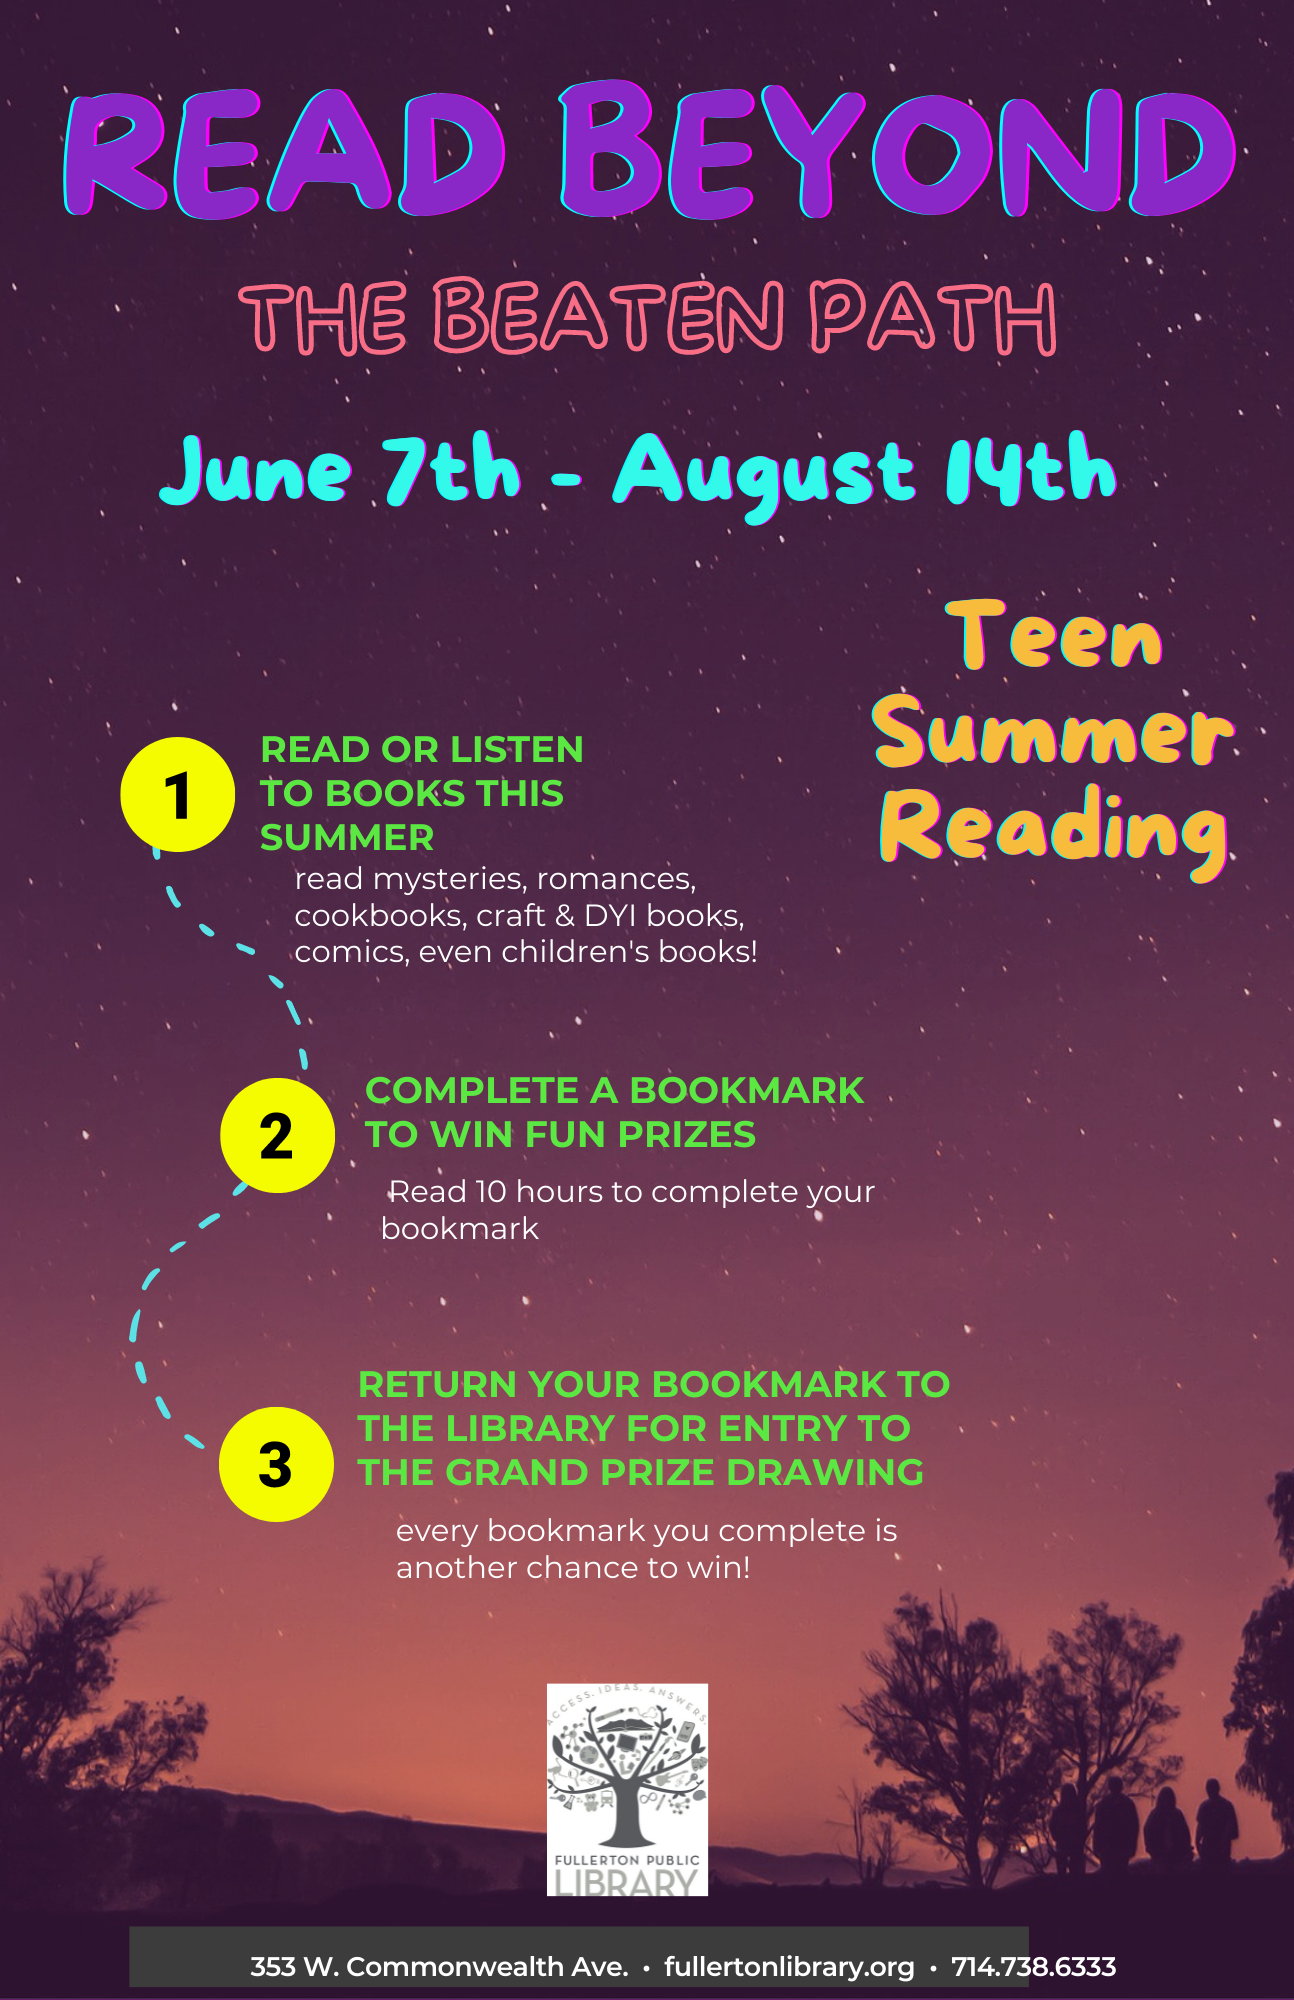 Teen summer reading program June 7-August 14